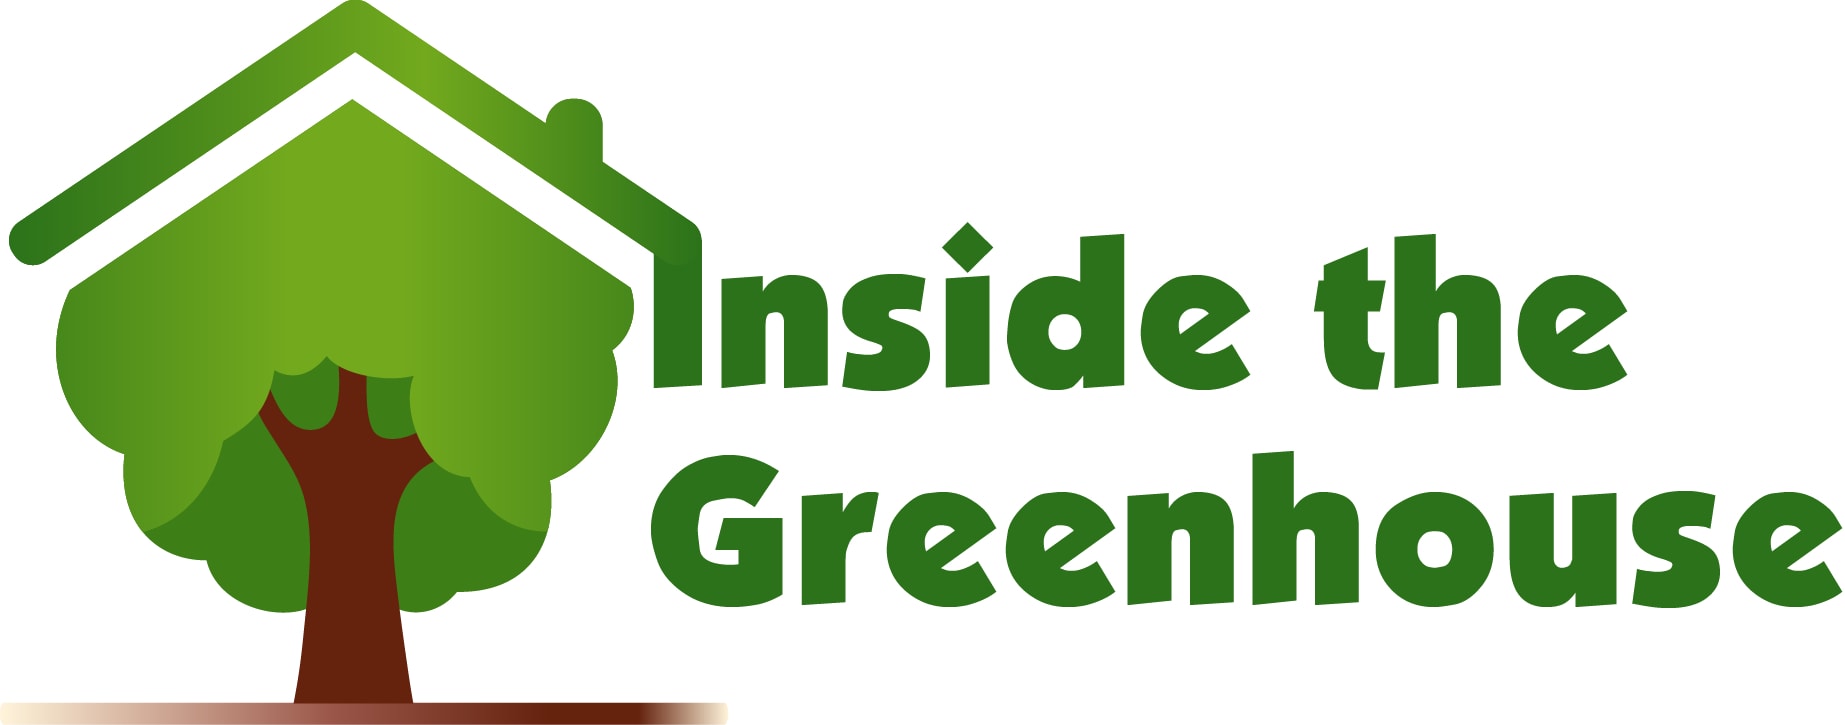 Inside the Greenhouse logo - Links to website